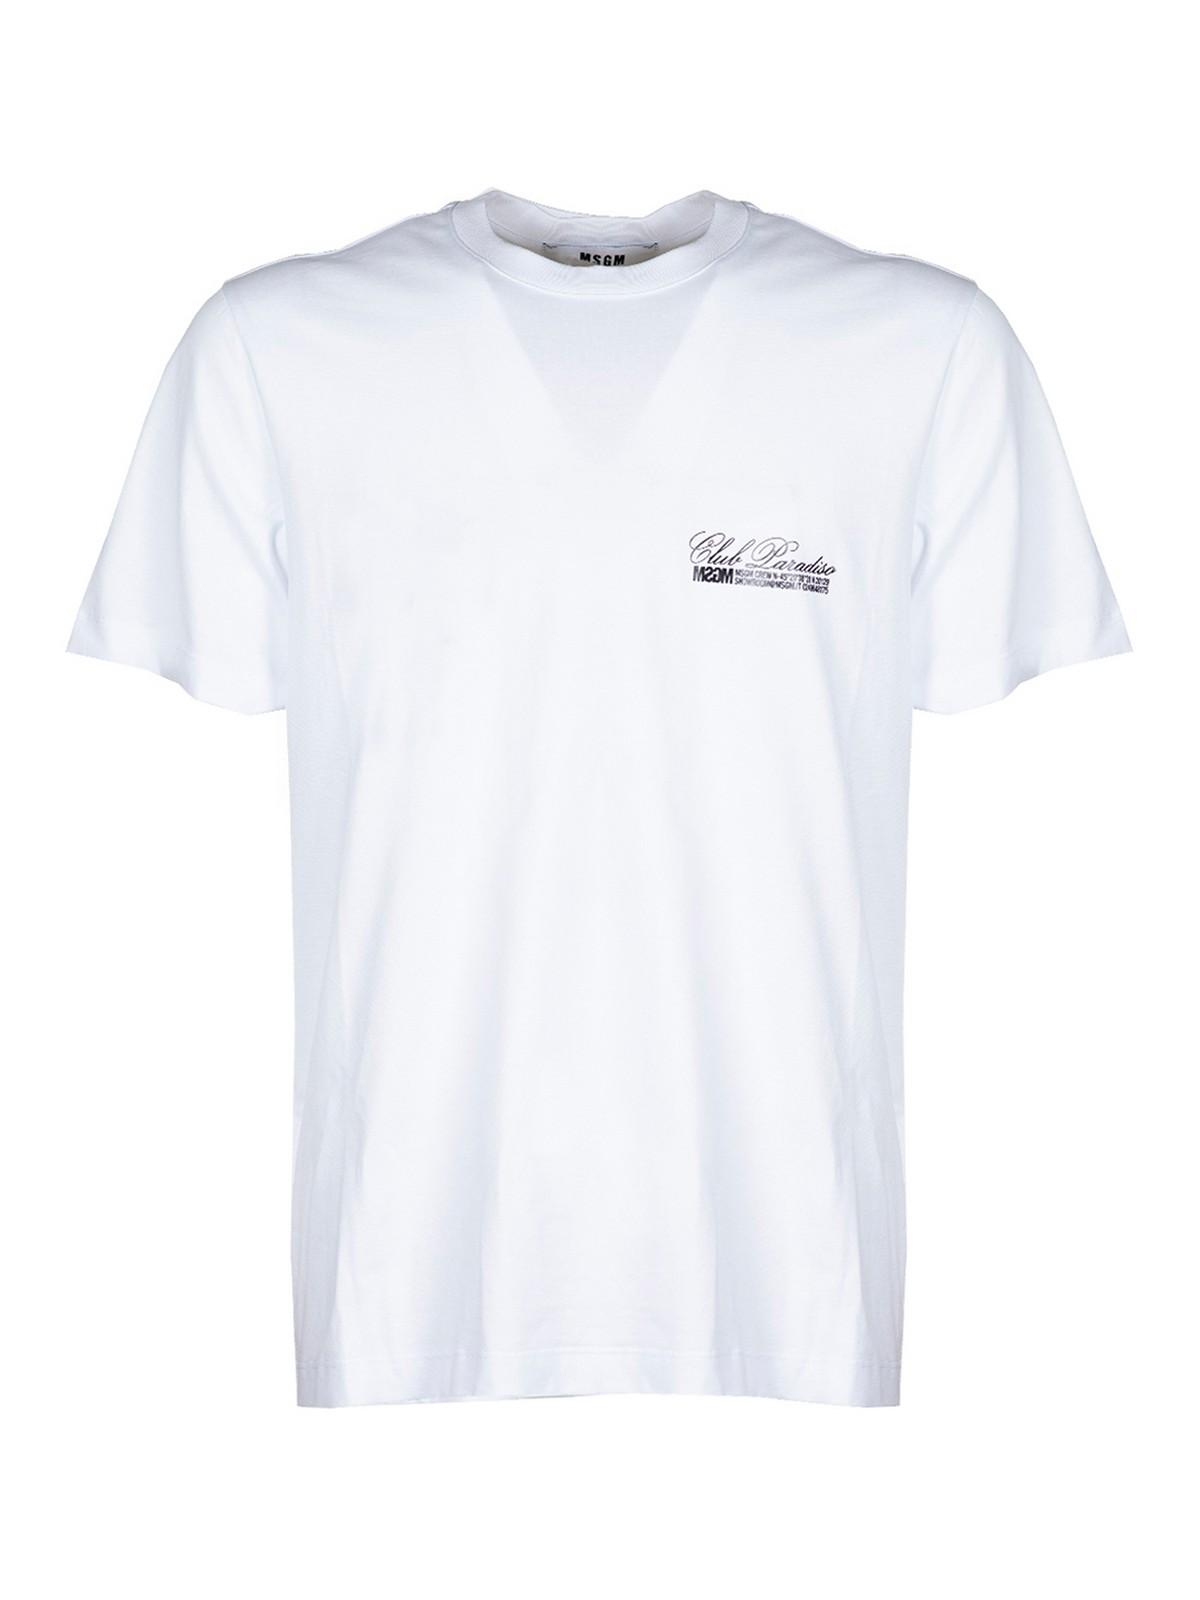 T-shirts M.S.G.M. - Club paradiso T-shirt - 3440MM195237002